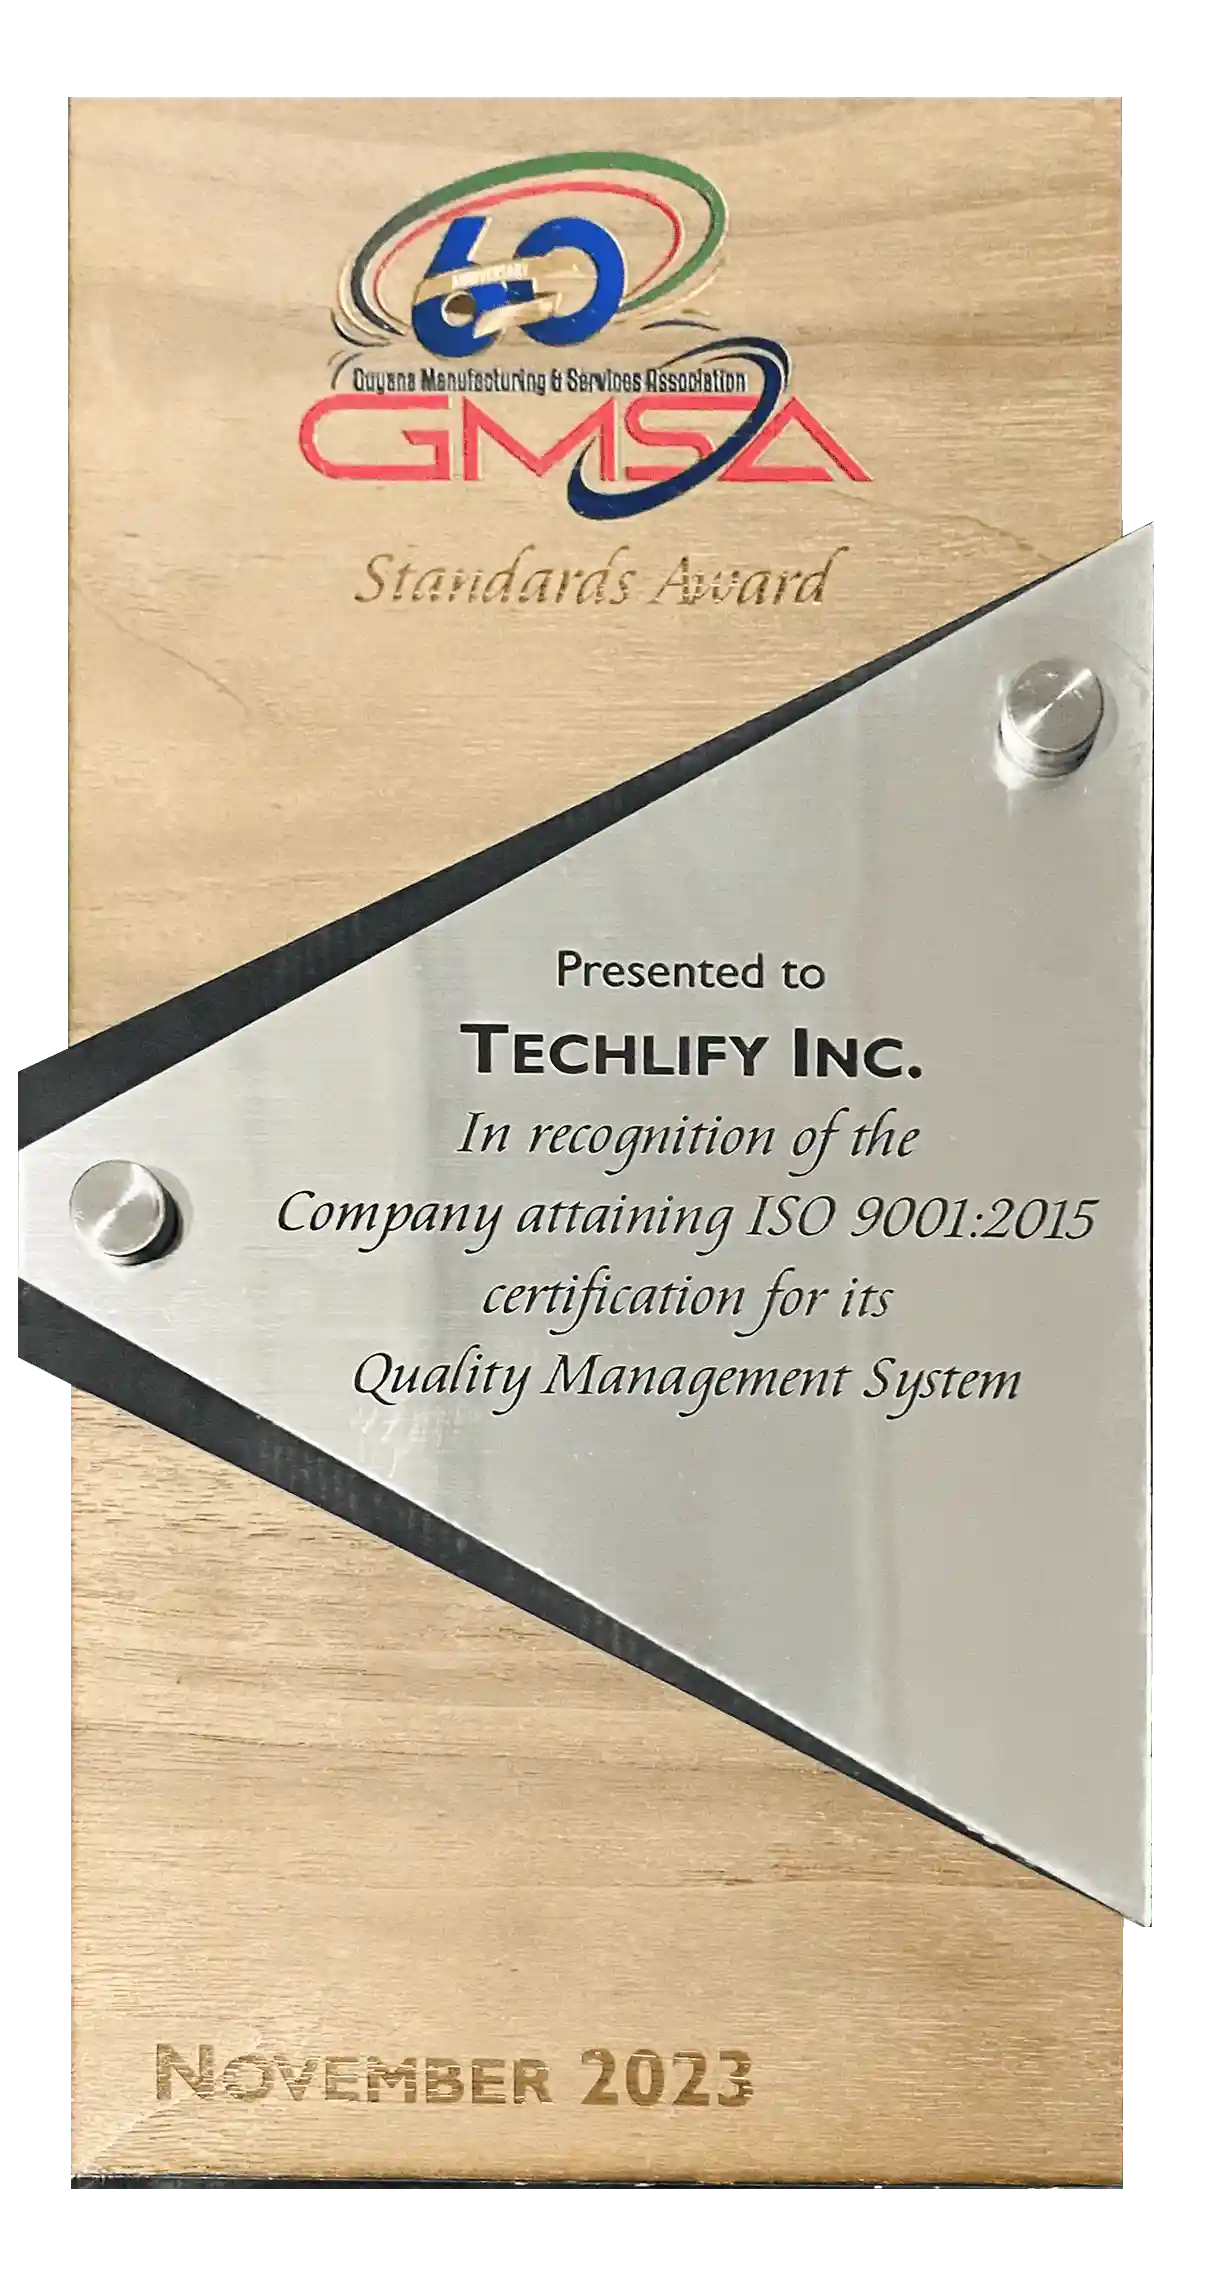 GMSA Techlify Award